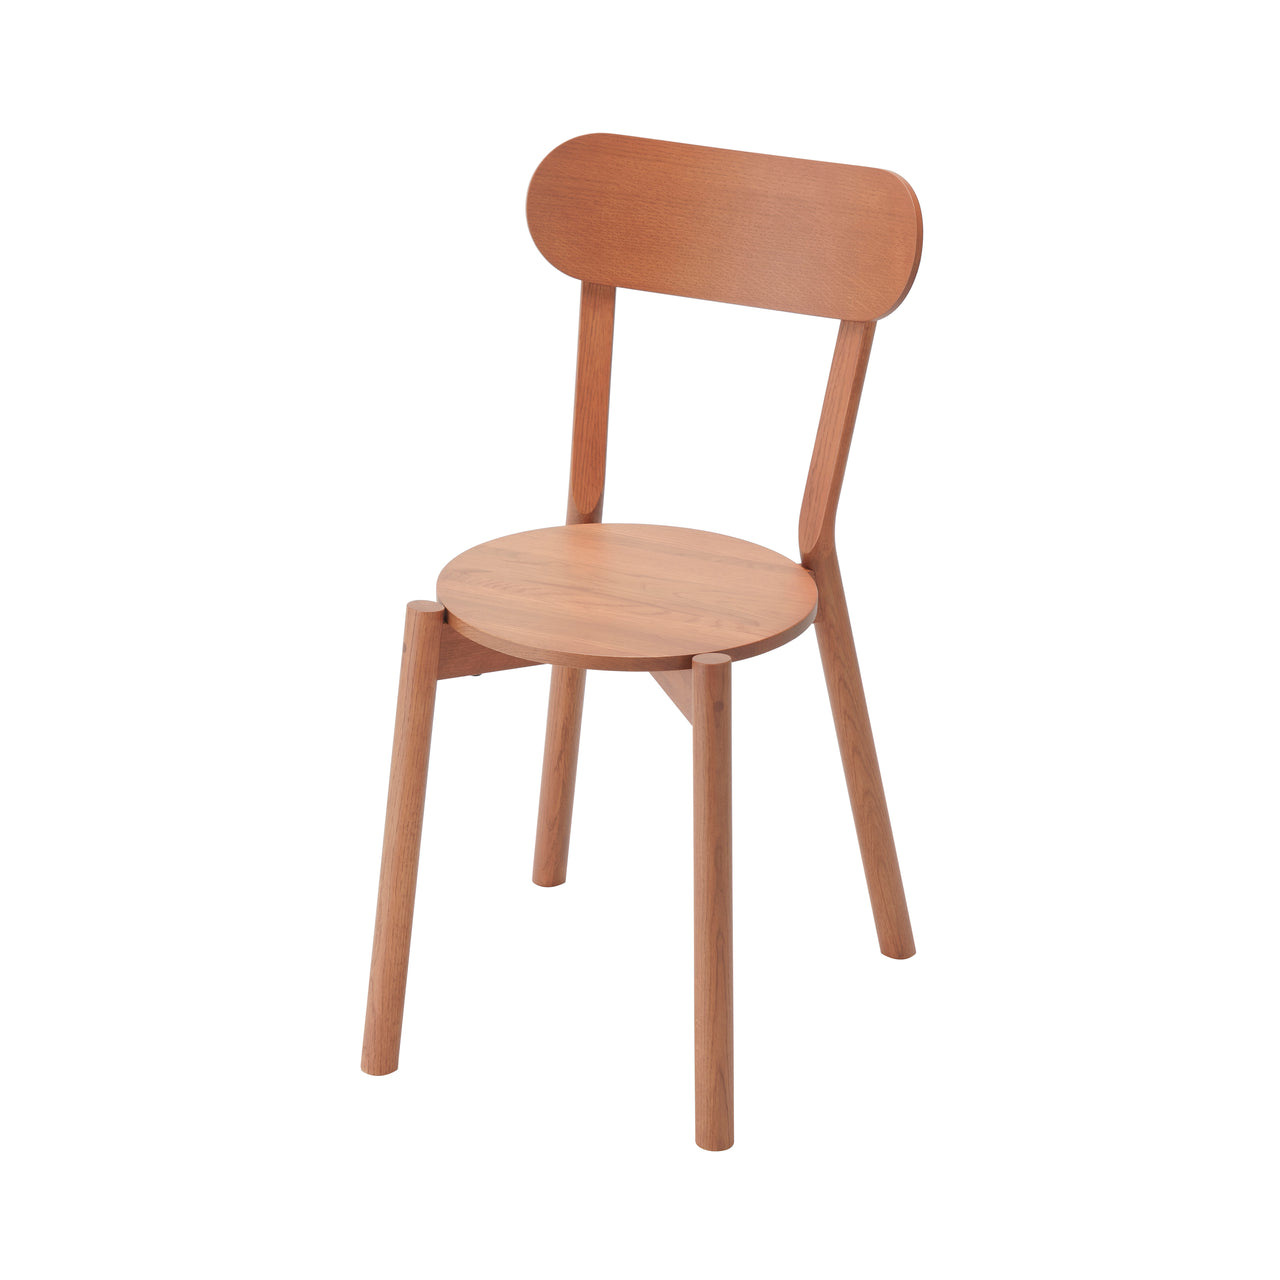 Castor Chair Stacking: Terracotta